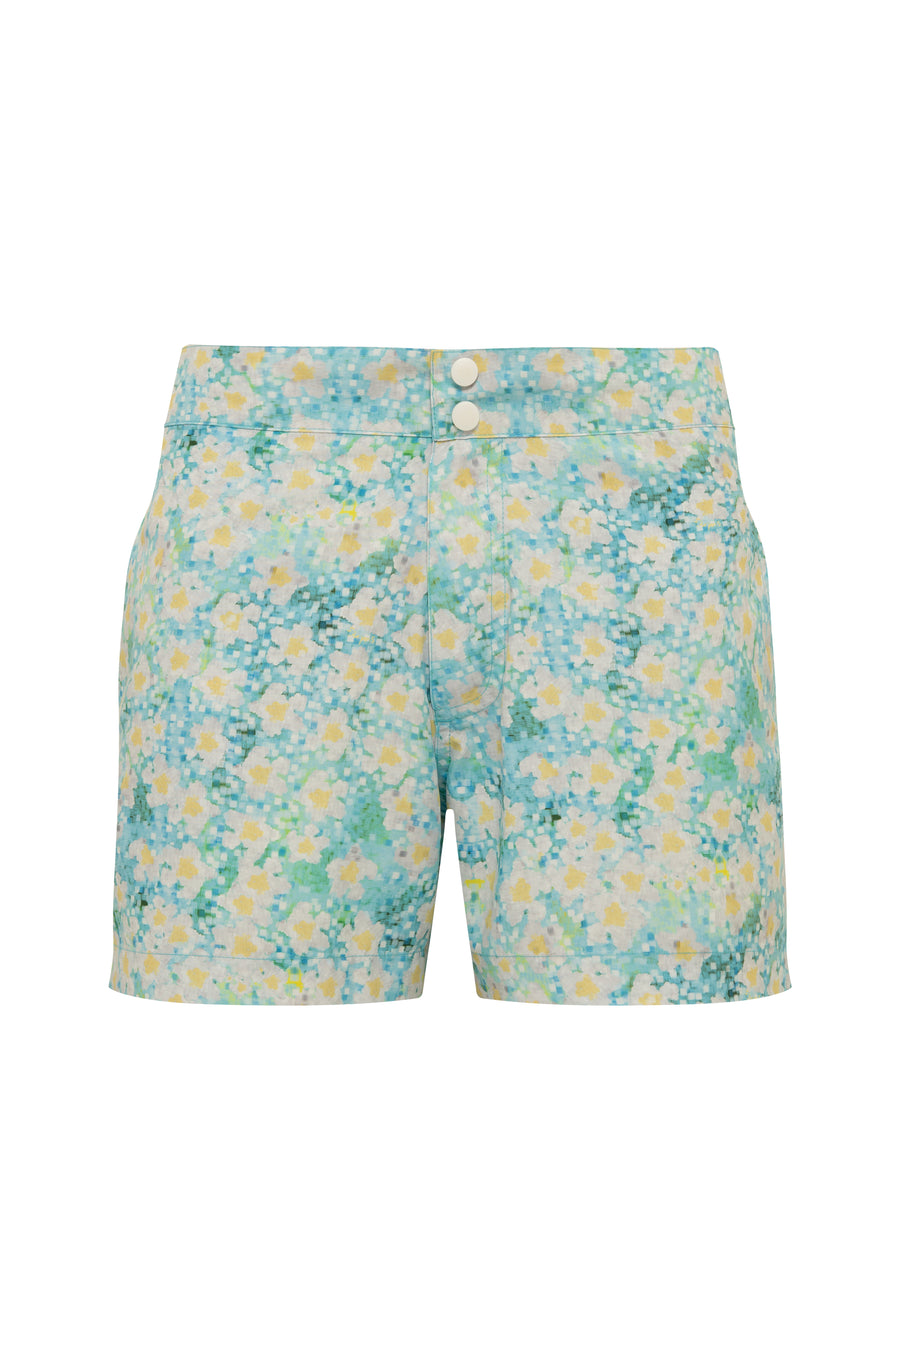 MALI - Mid-length printed swim shorts with snap closure